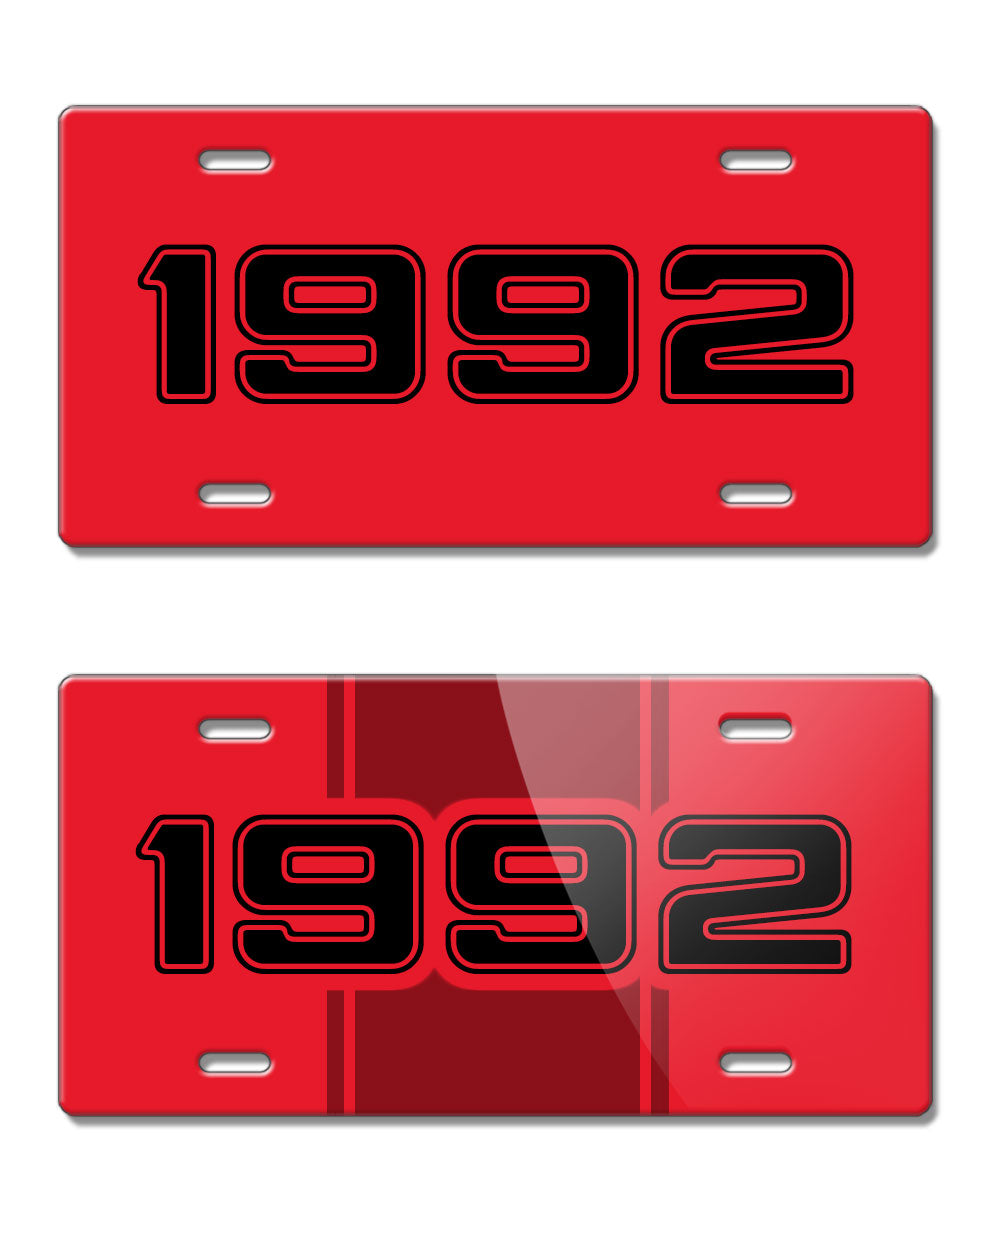 1992 Customizable - License Plate